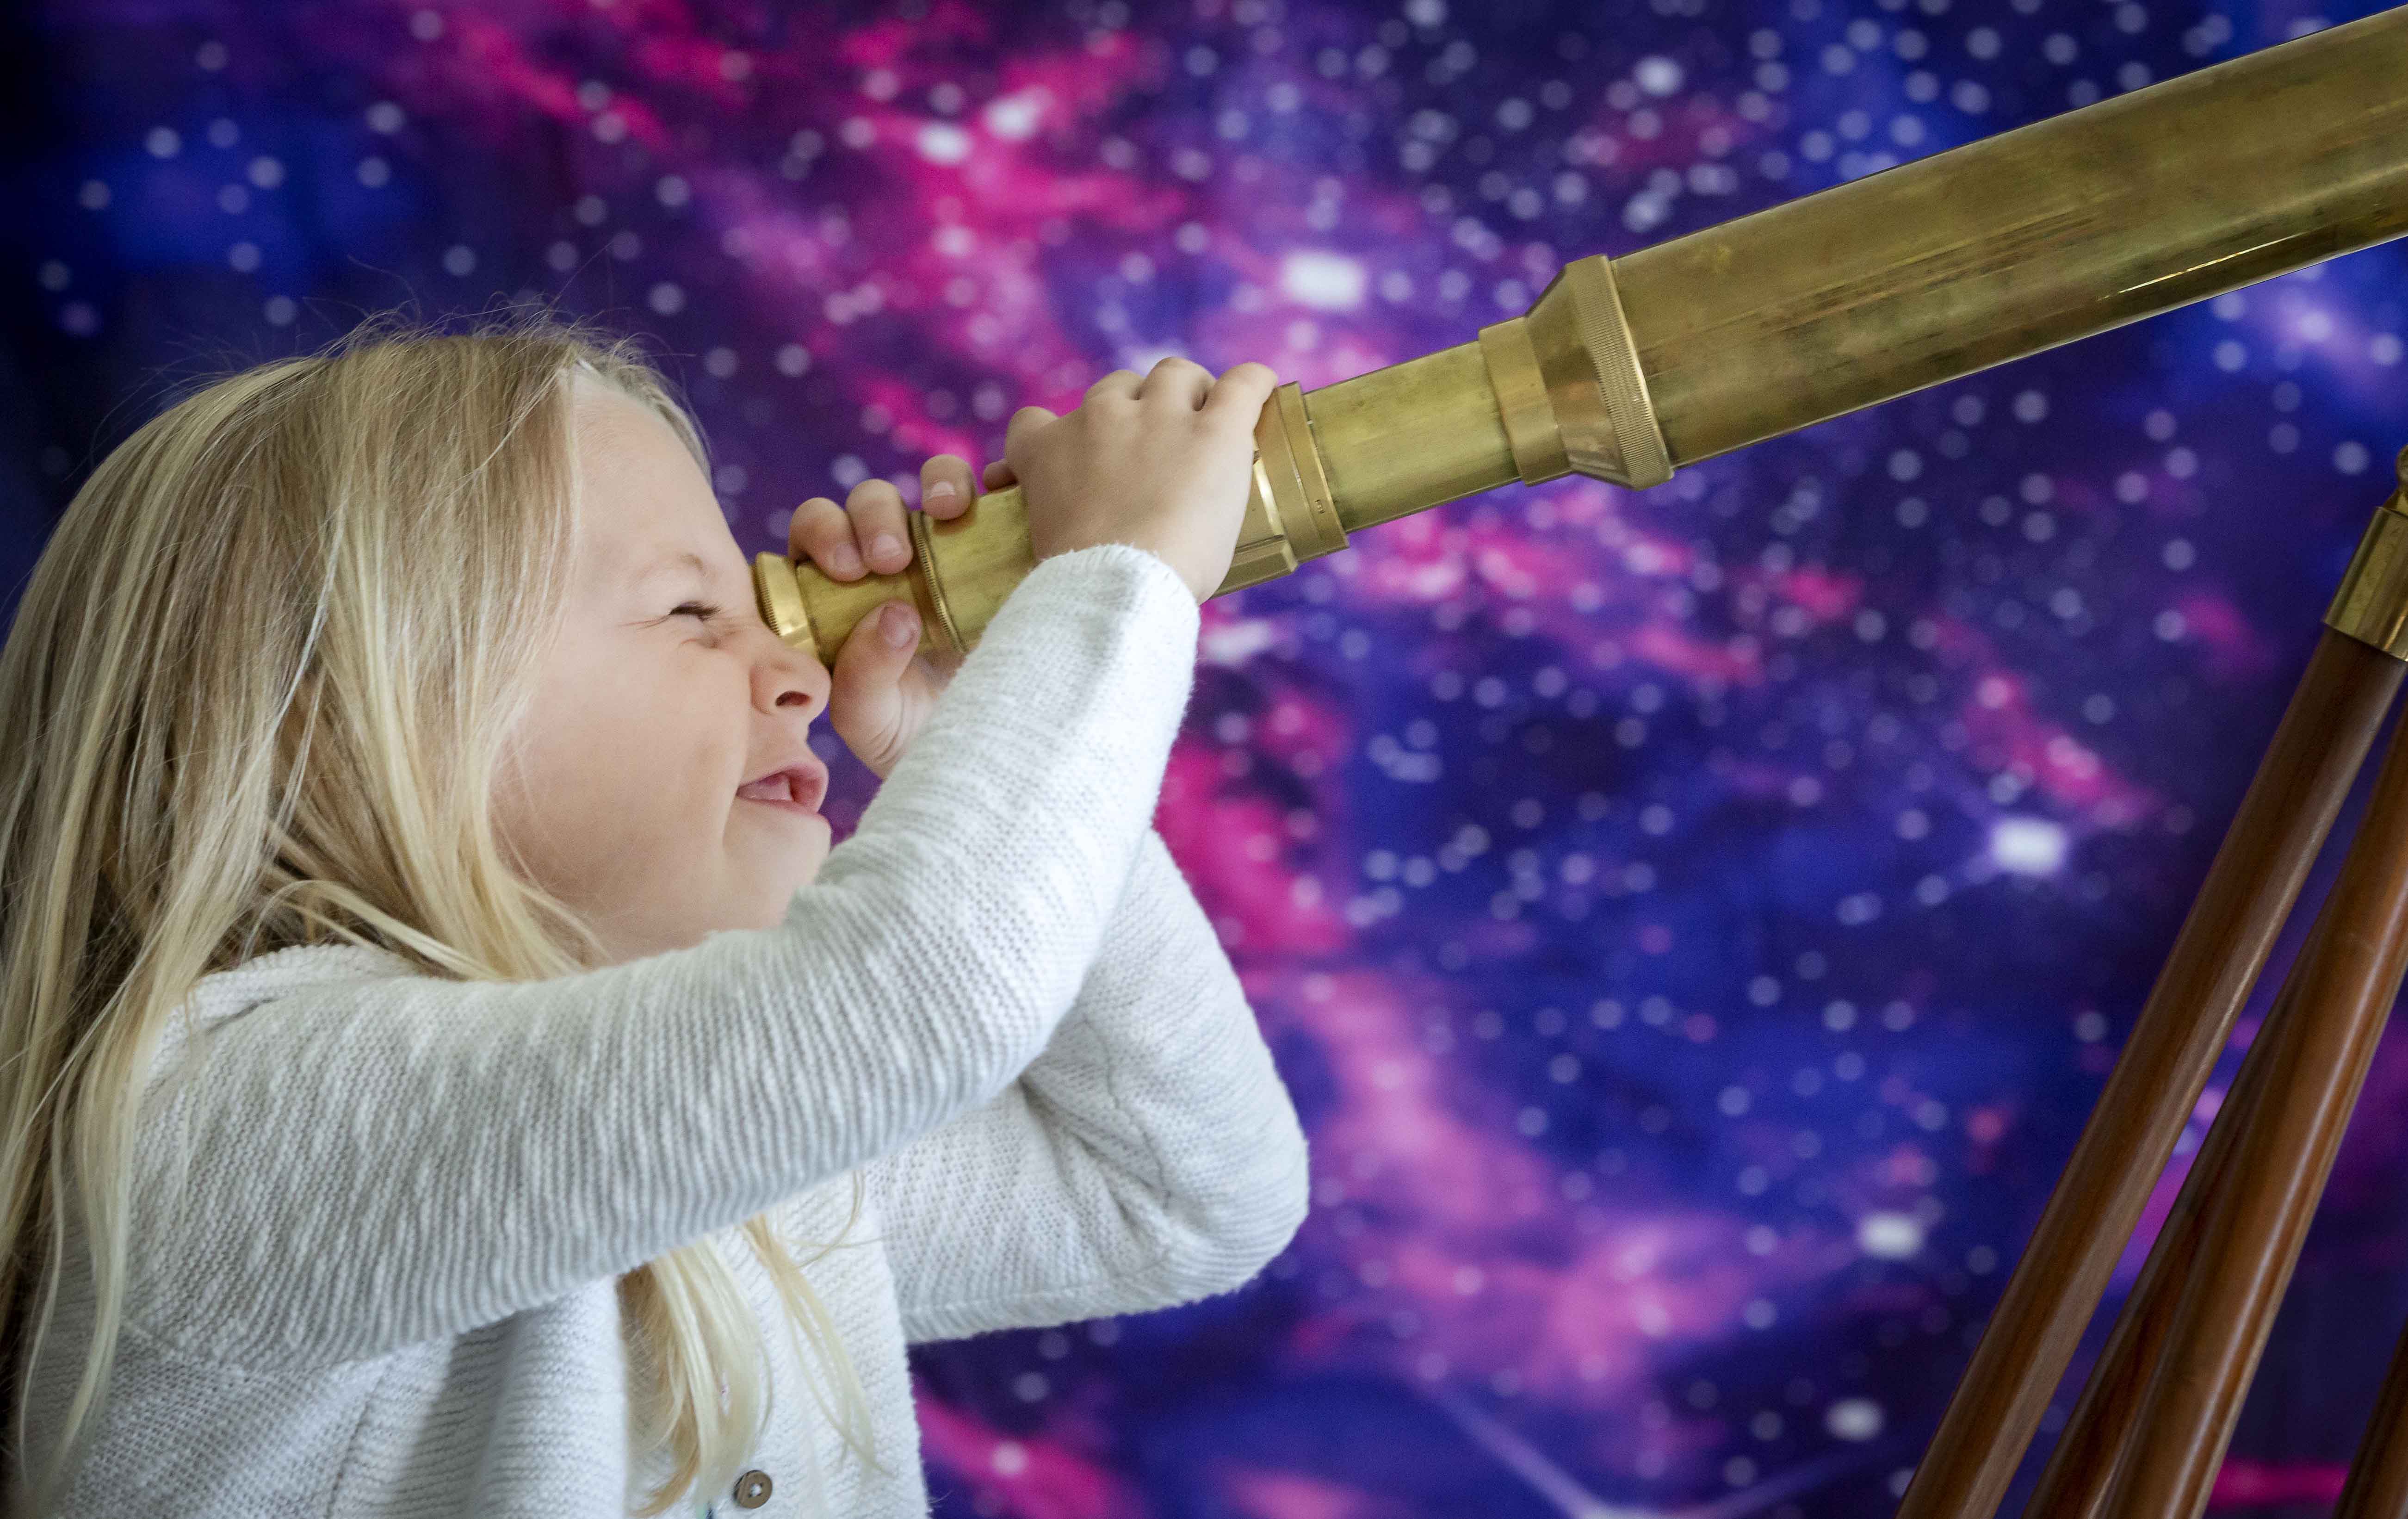 A young girl looks through a telescope. 